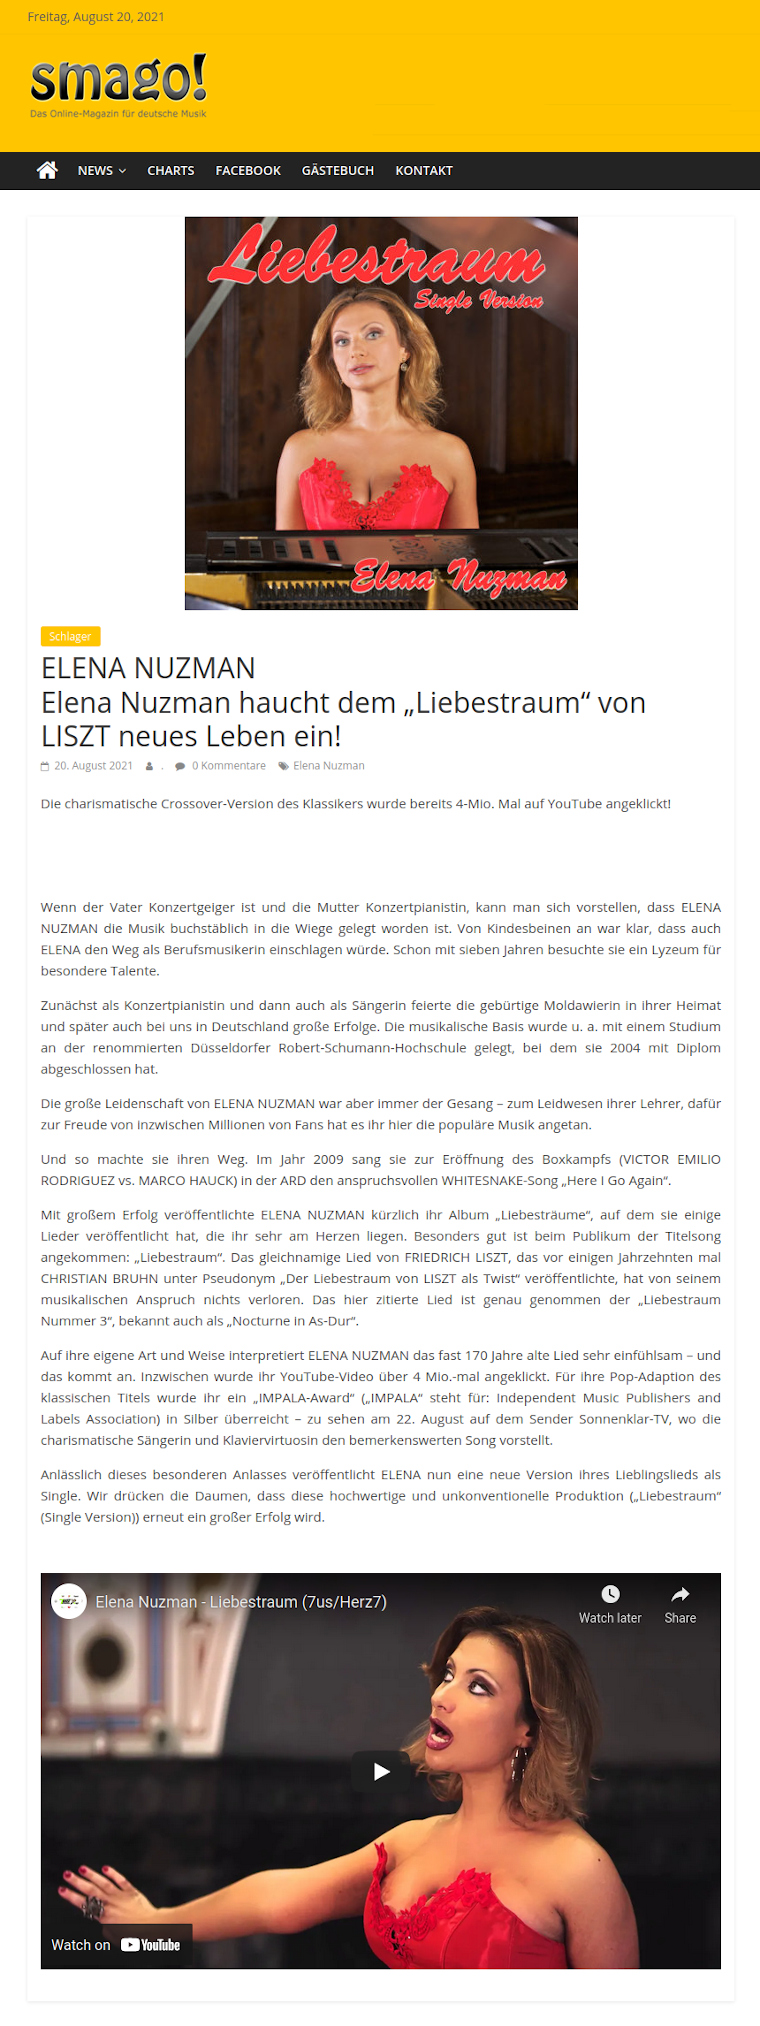 Elena Nuzman - News - smago.de - August 2021